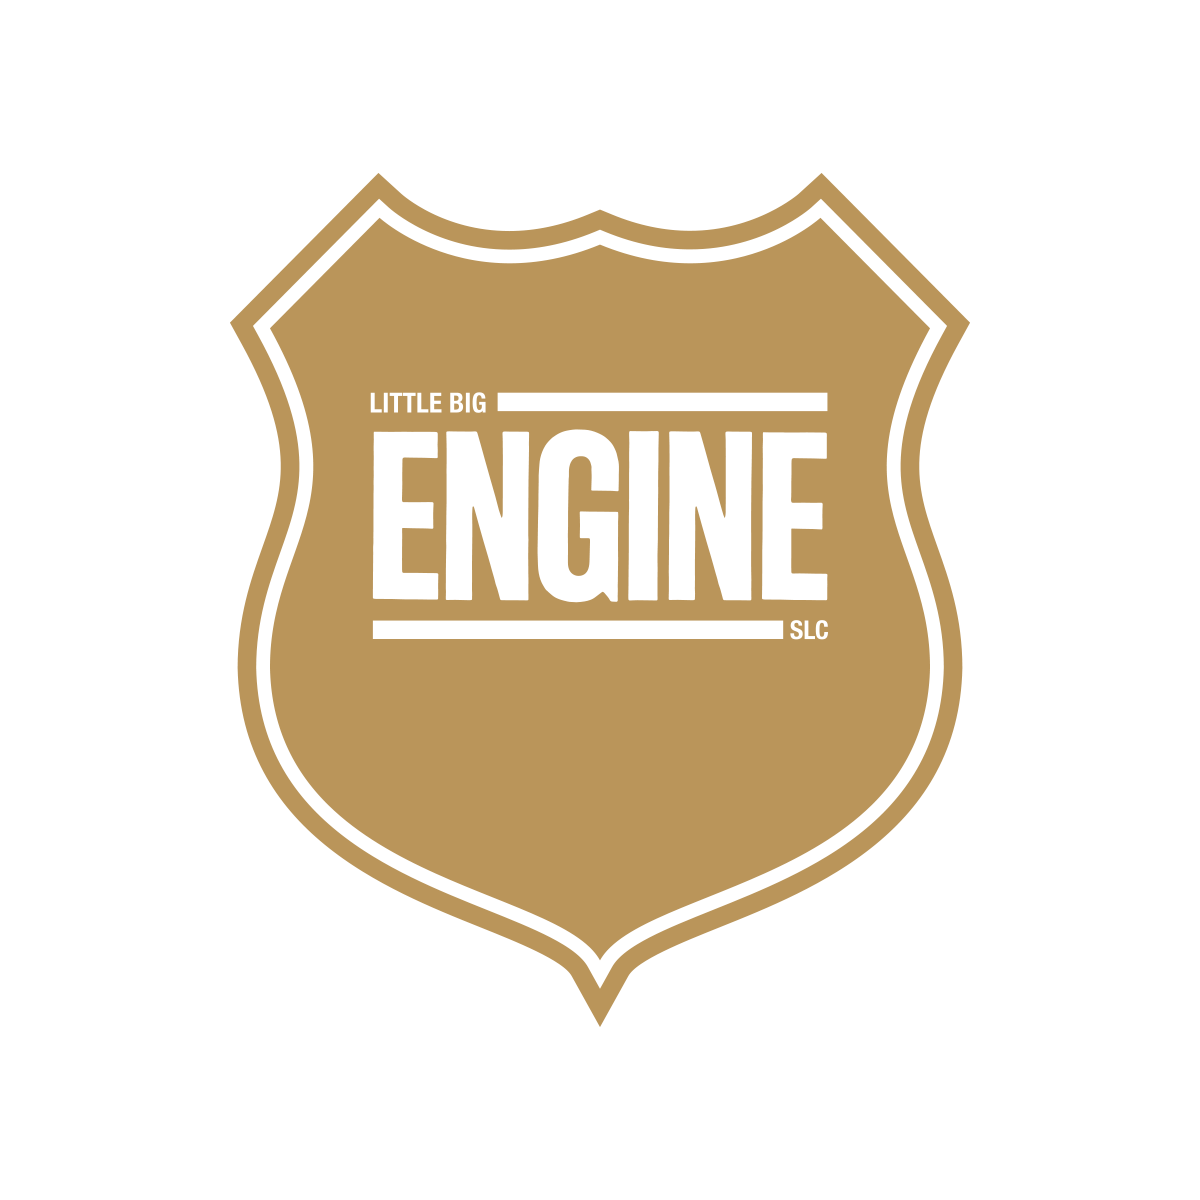 Little BIG Engine